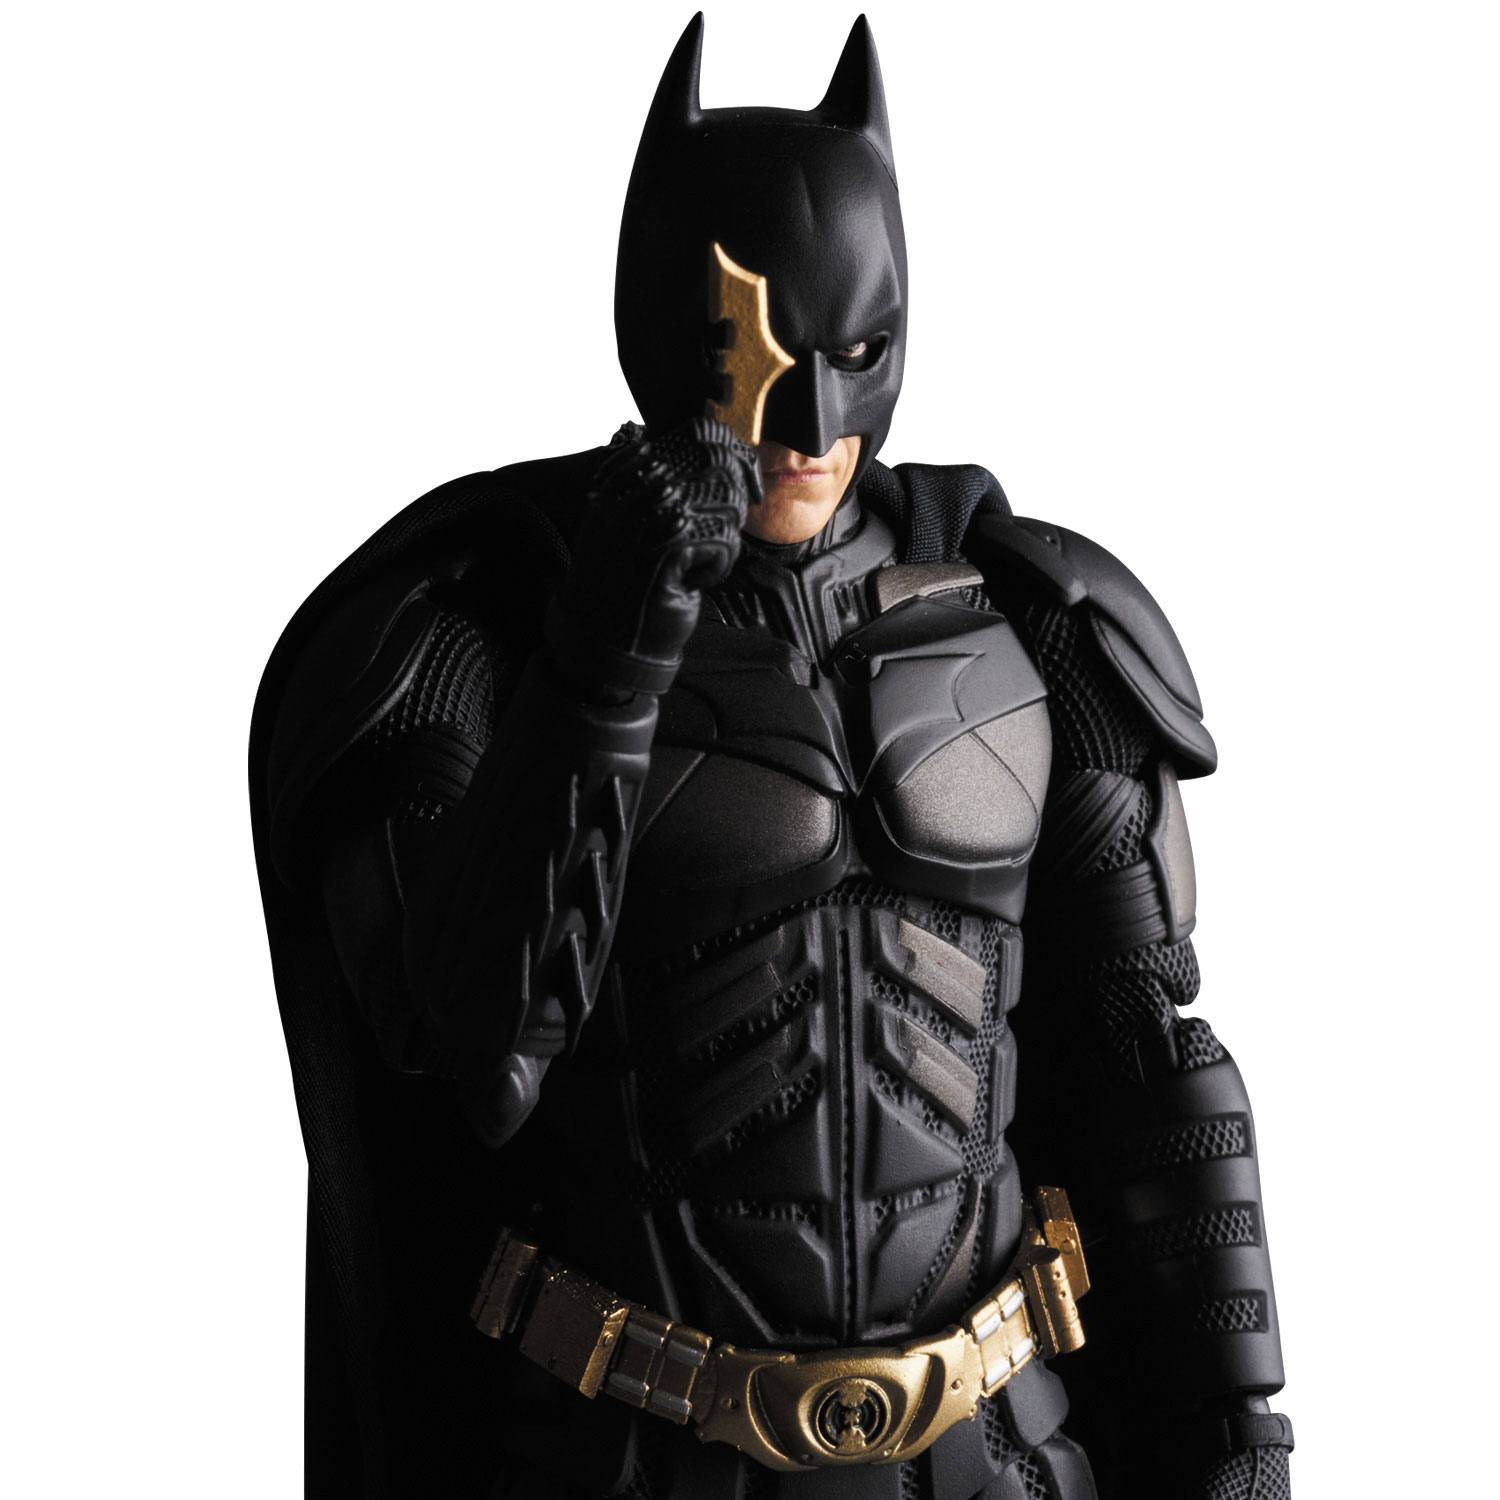 Action figures - Batman The Dark Knight Rises figurine Medicom MAF Bat